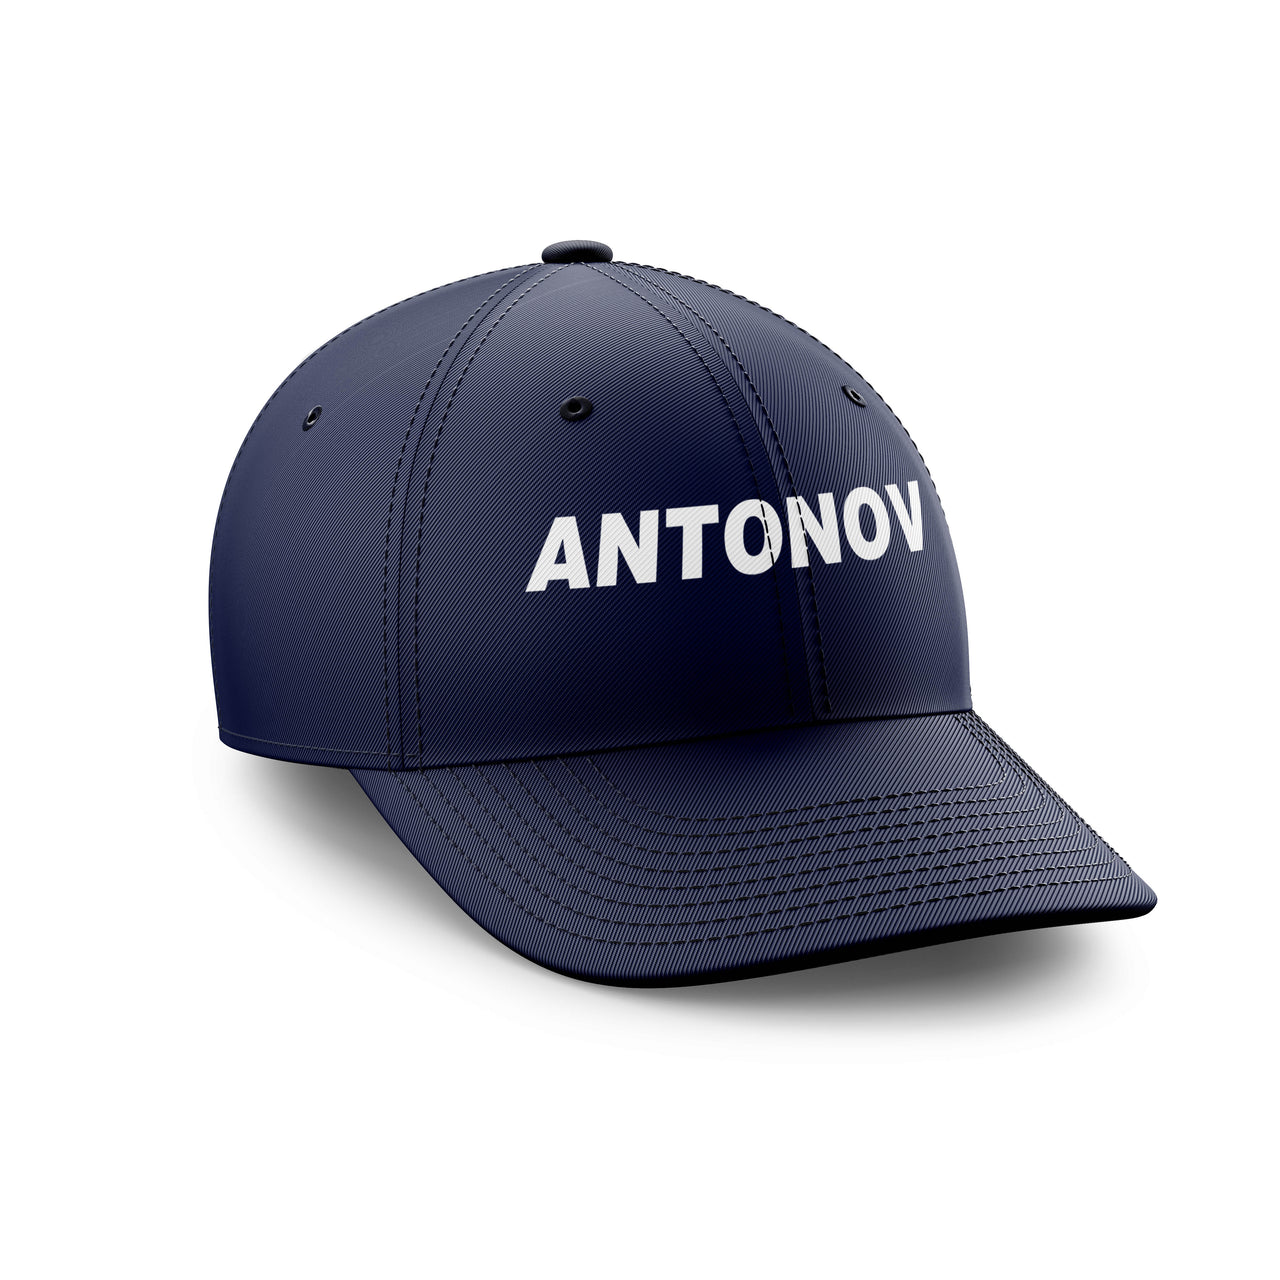 Antonov & Text Designed Embroidered Hats